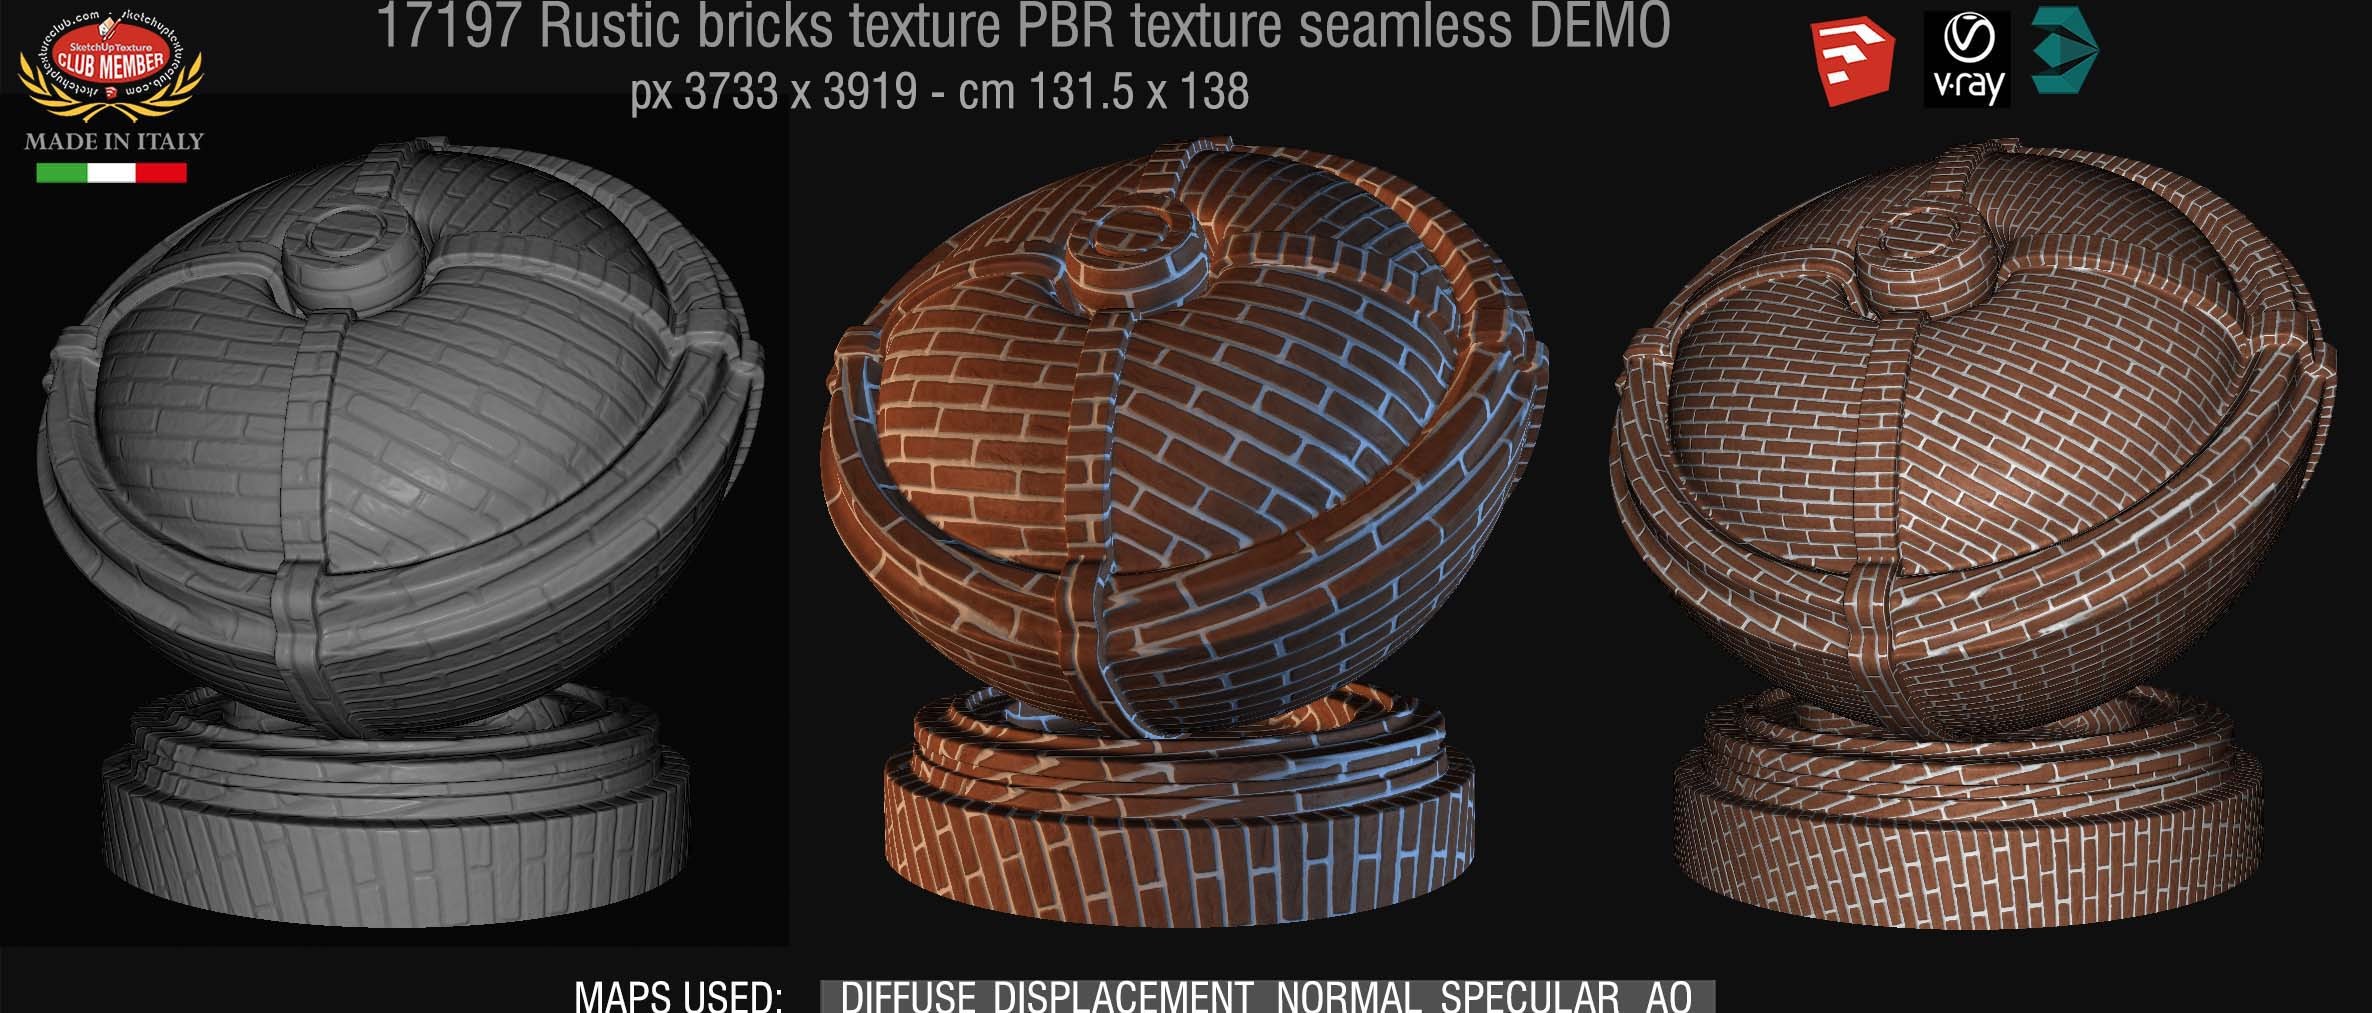 17197 Rustic bricks PBR texture seamless DEMO